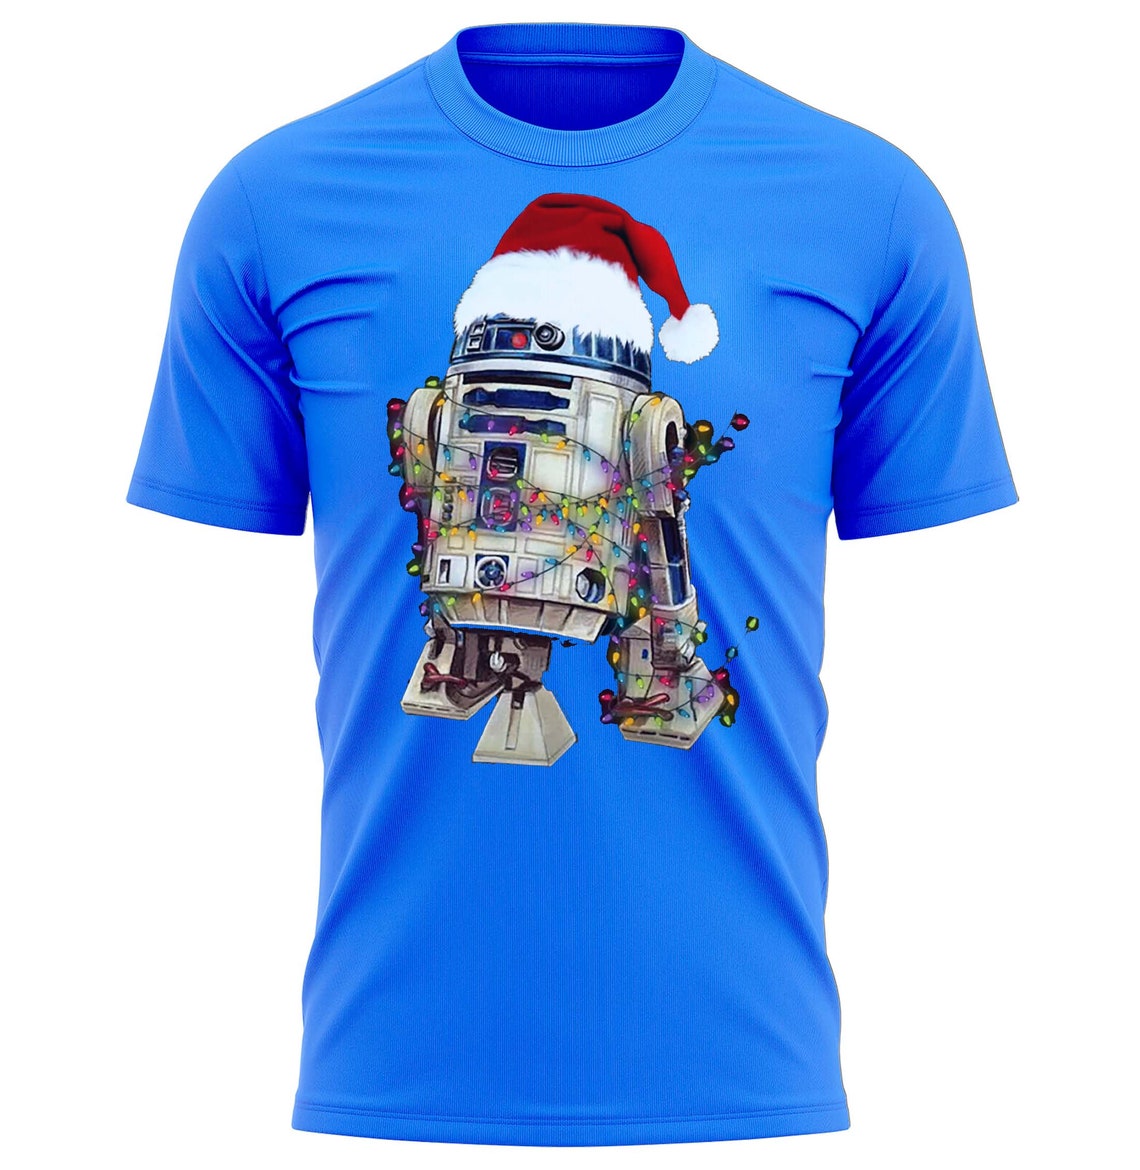 R2D2 Christmas Lights T-Shirt Xmas Tee Shirt Gift Present